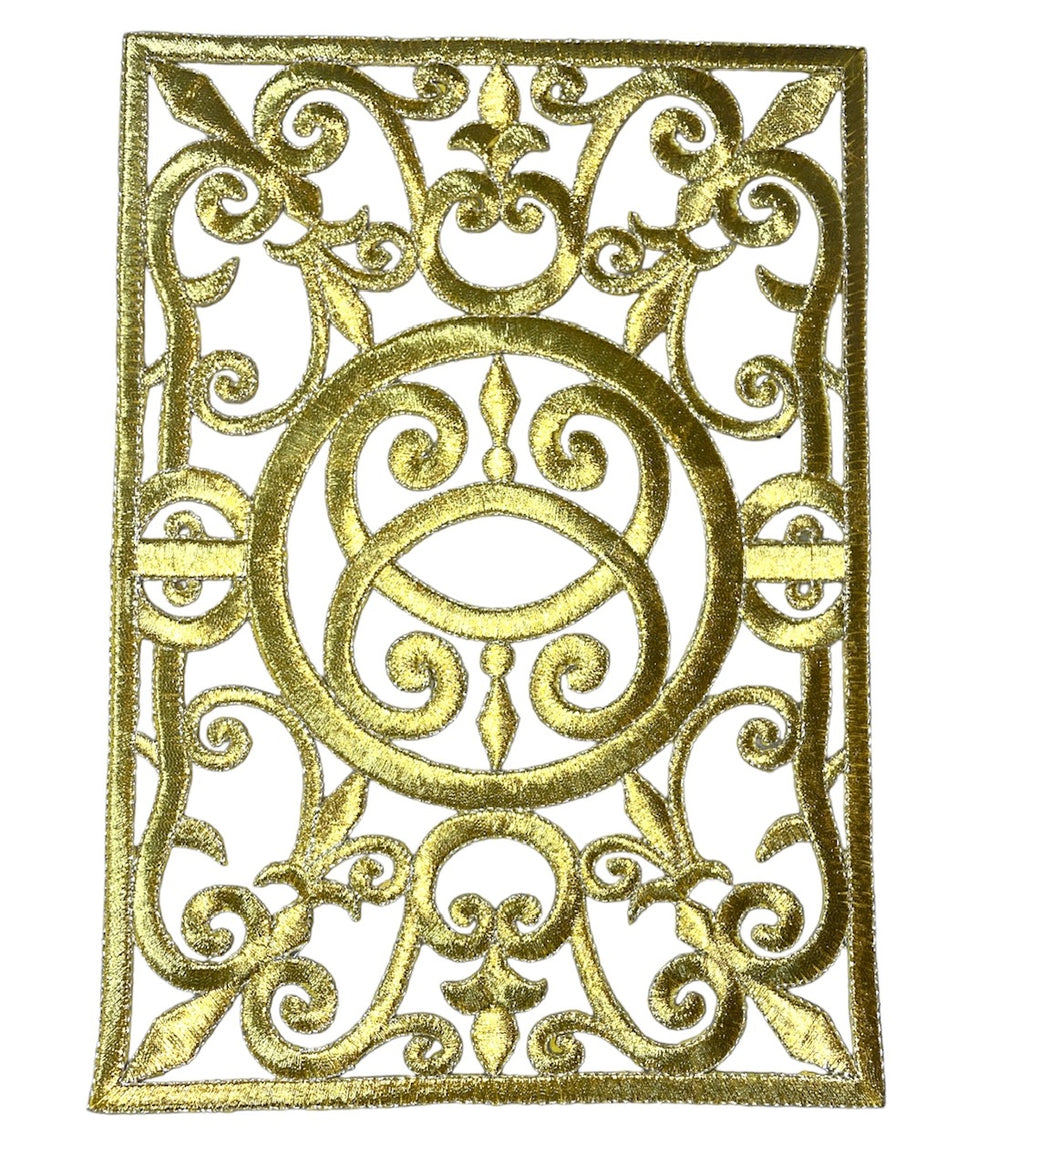 Designer Motif Metallic Gold Embroidered Iron-On 9.75